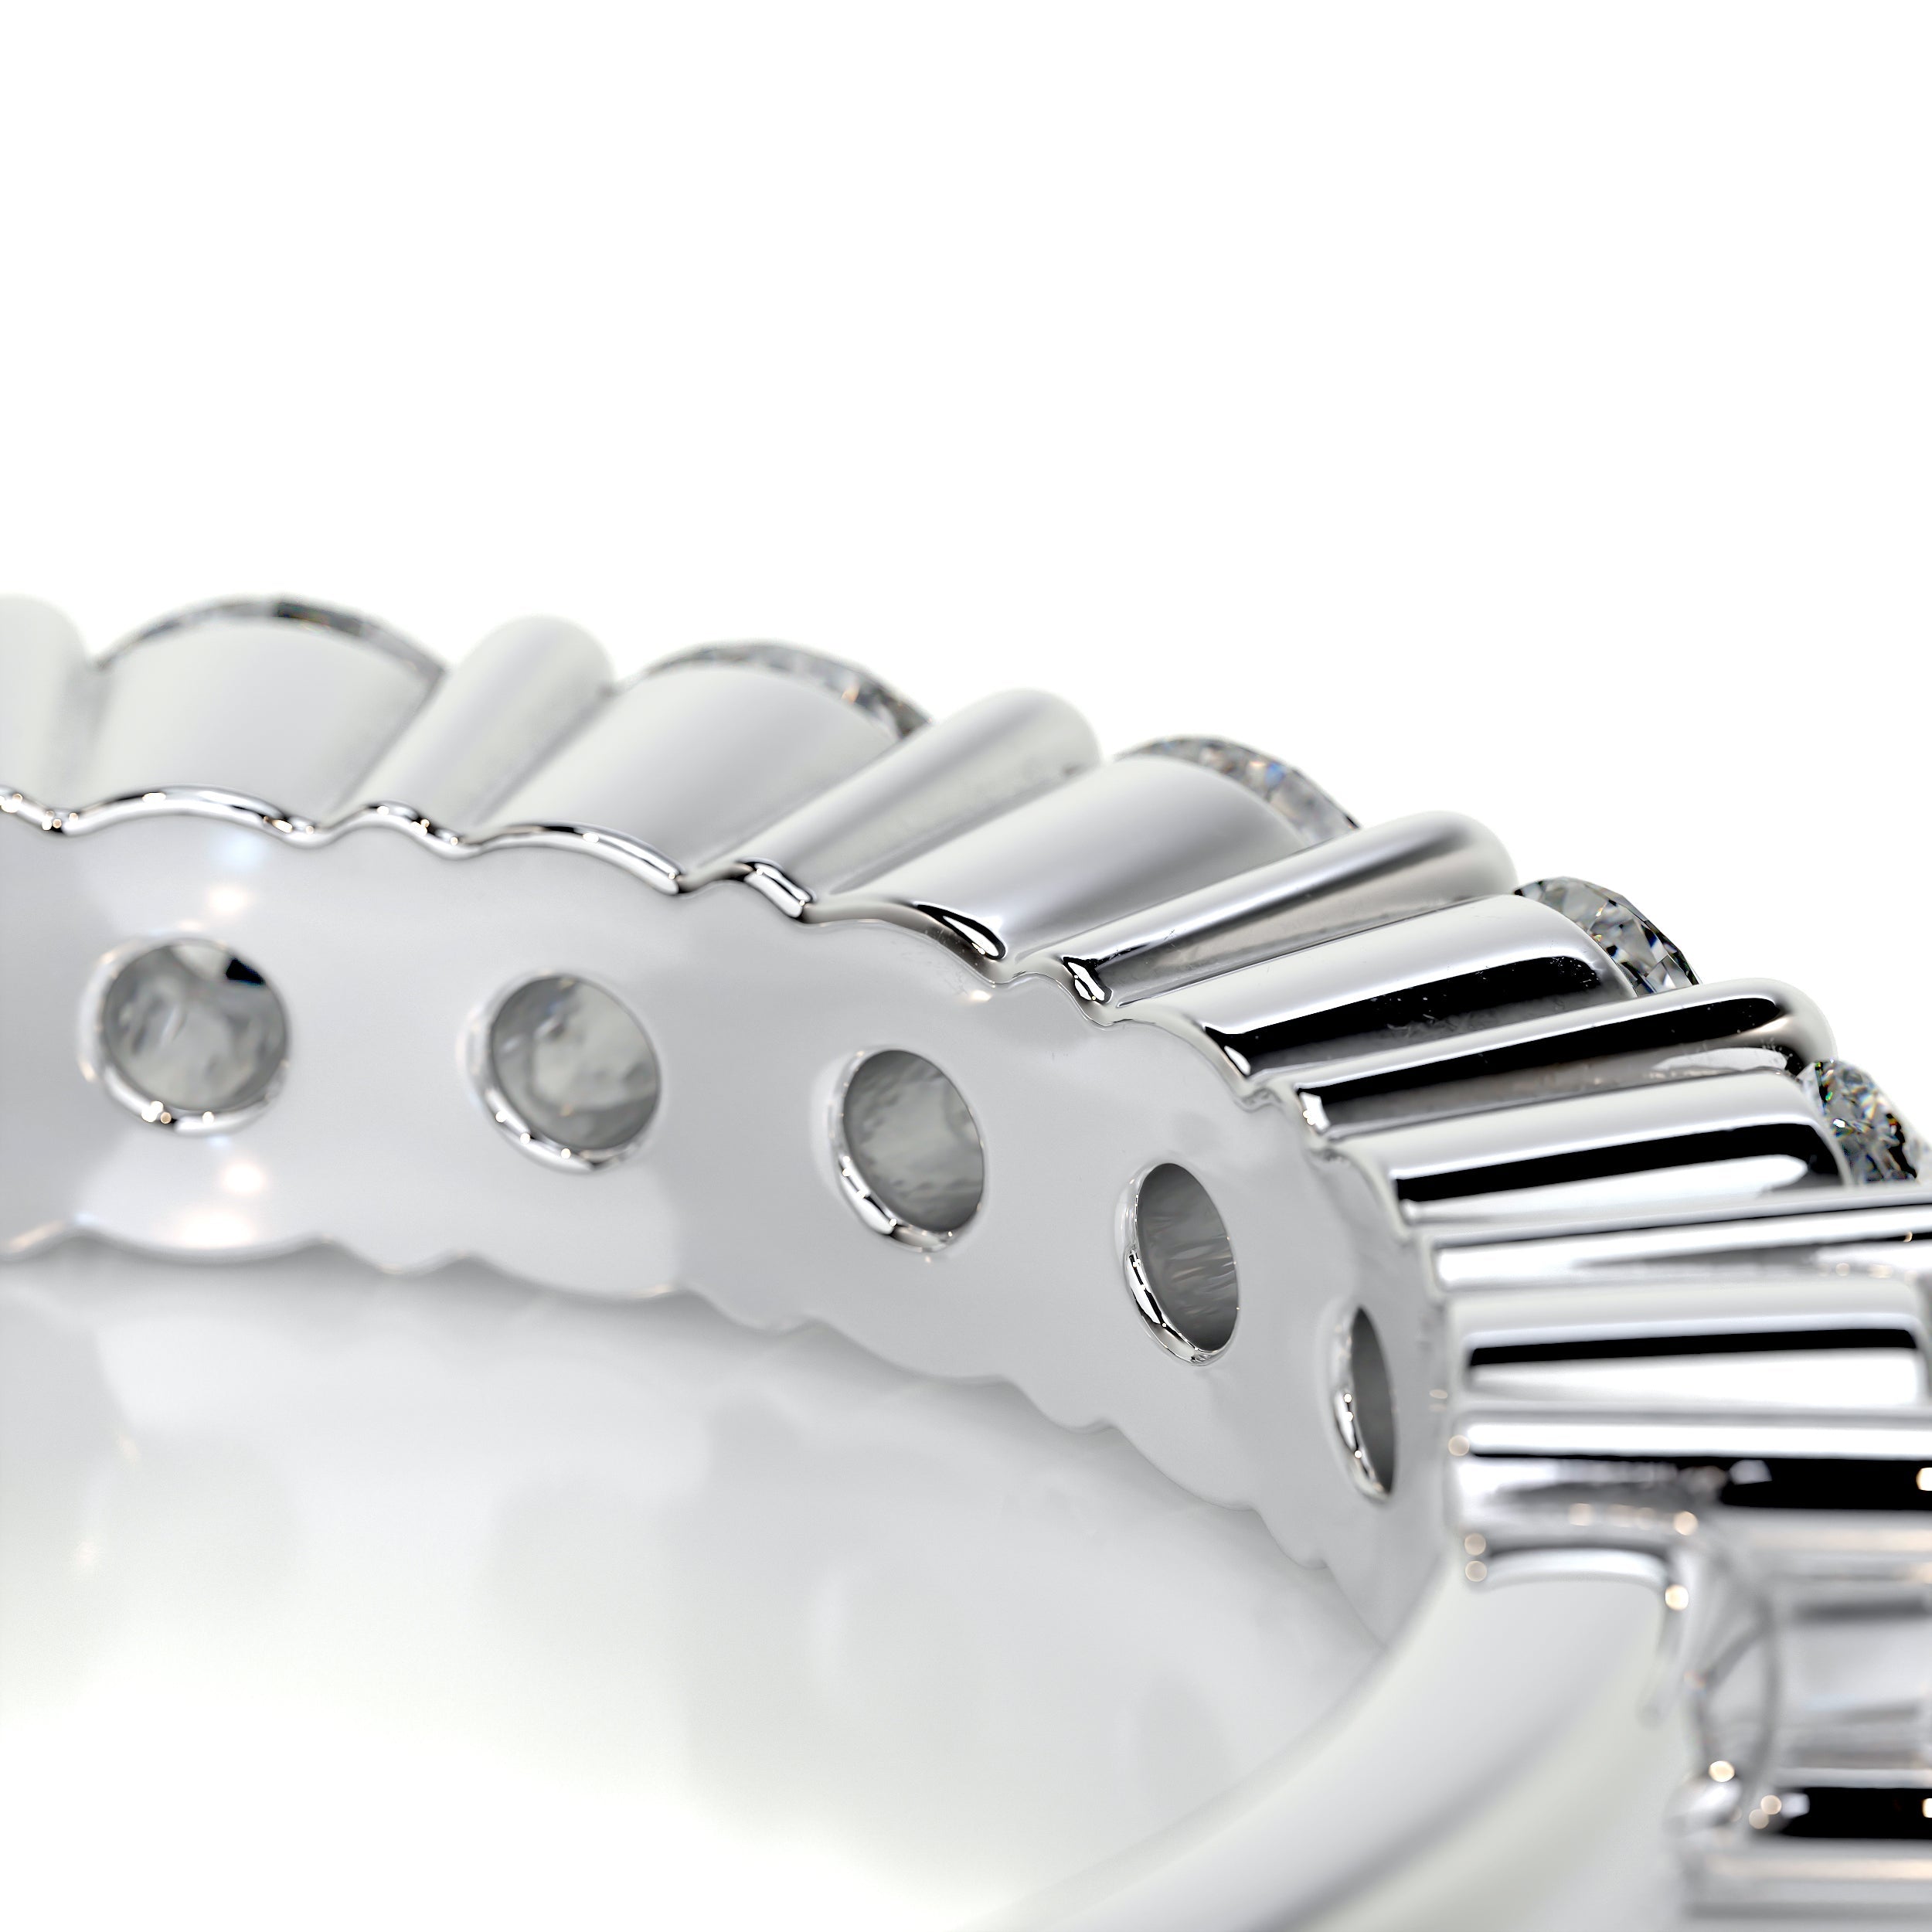 Catherine Diamond Wedding Ring   (0.75 Carat) -18K White Gold (RTS)